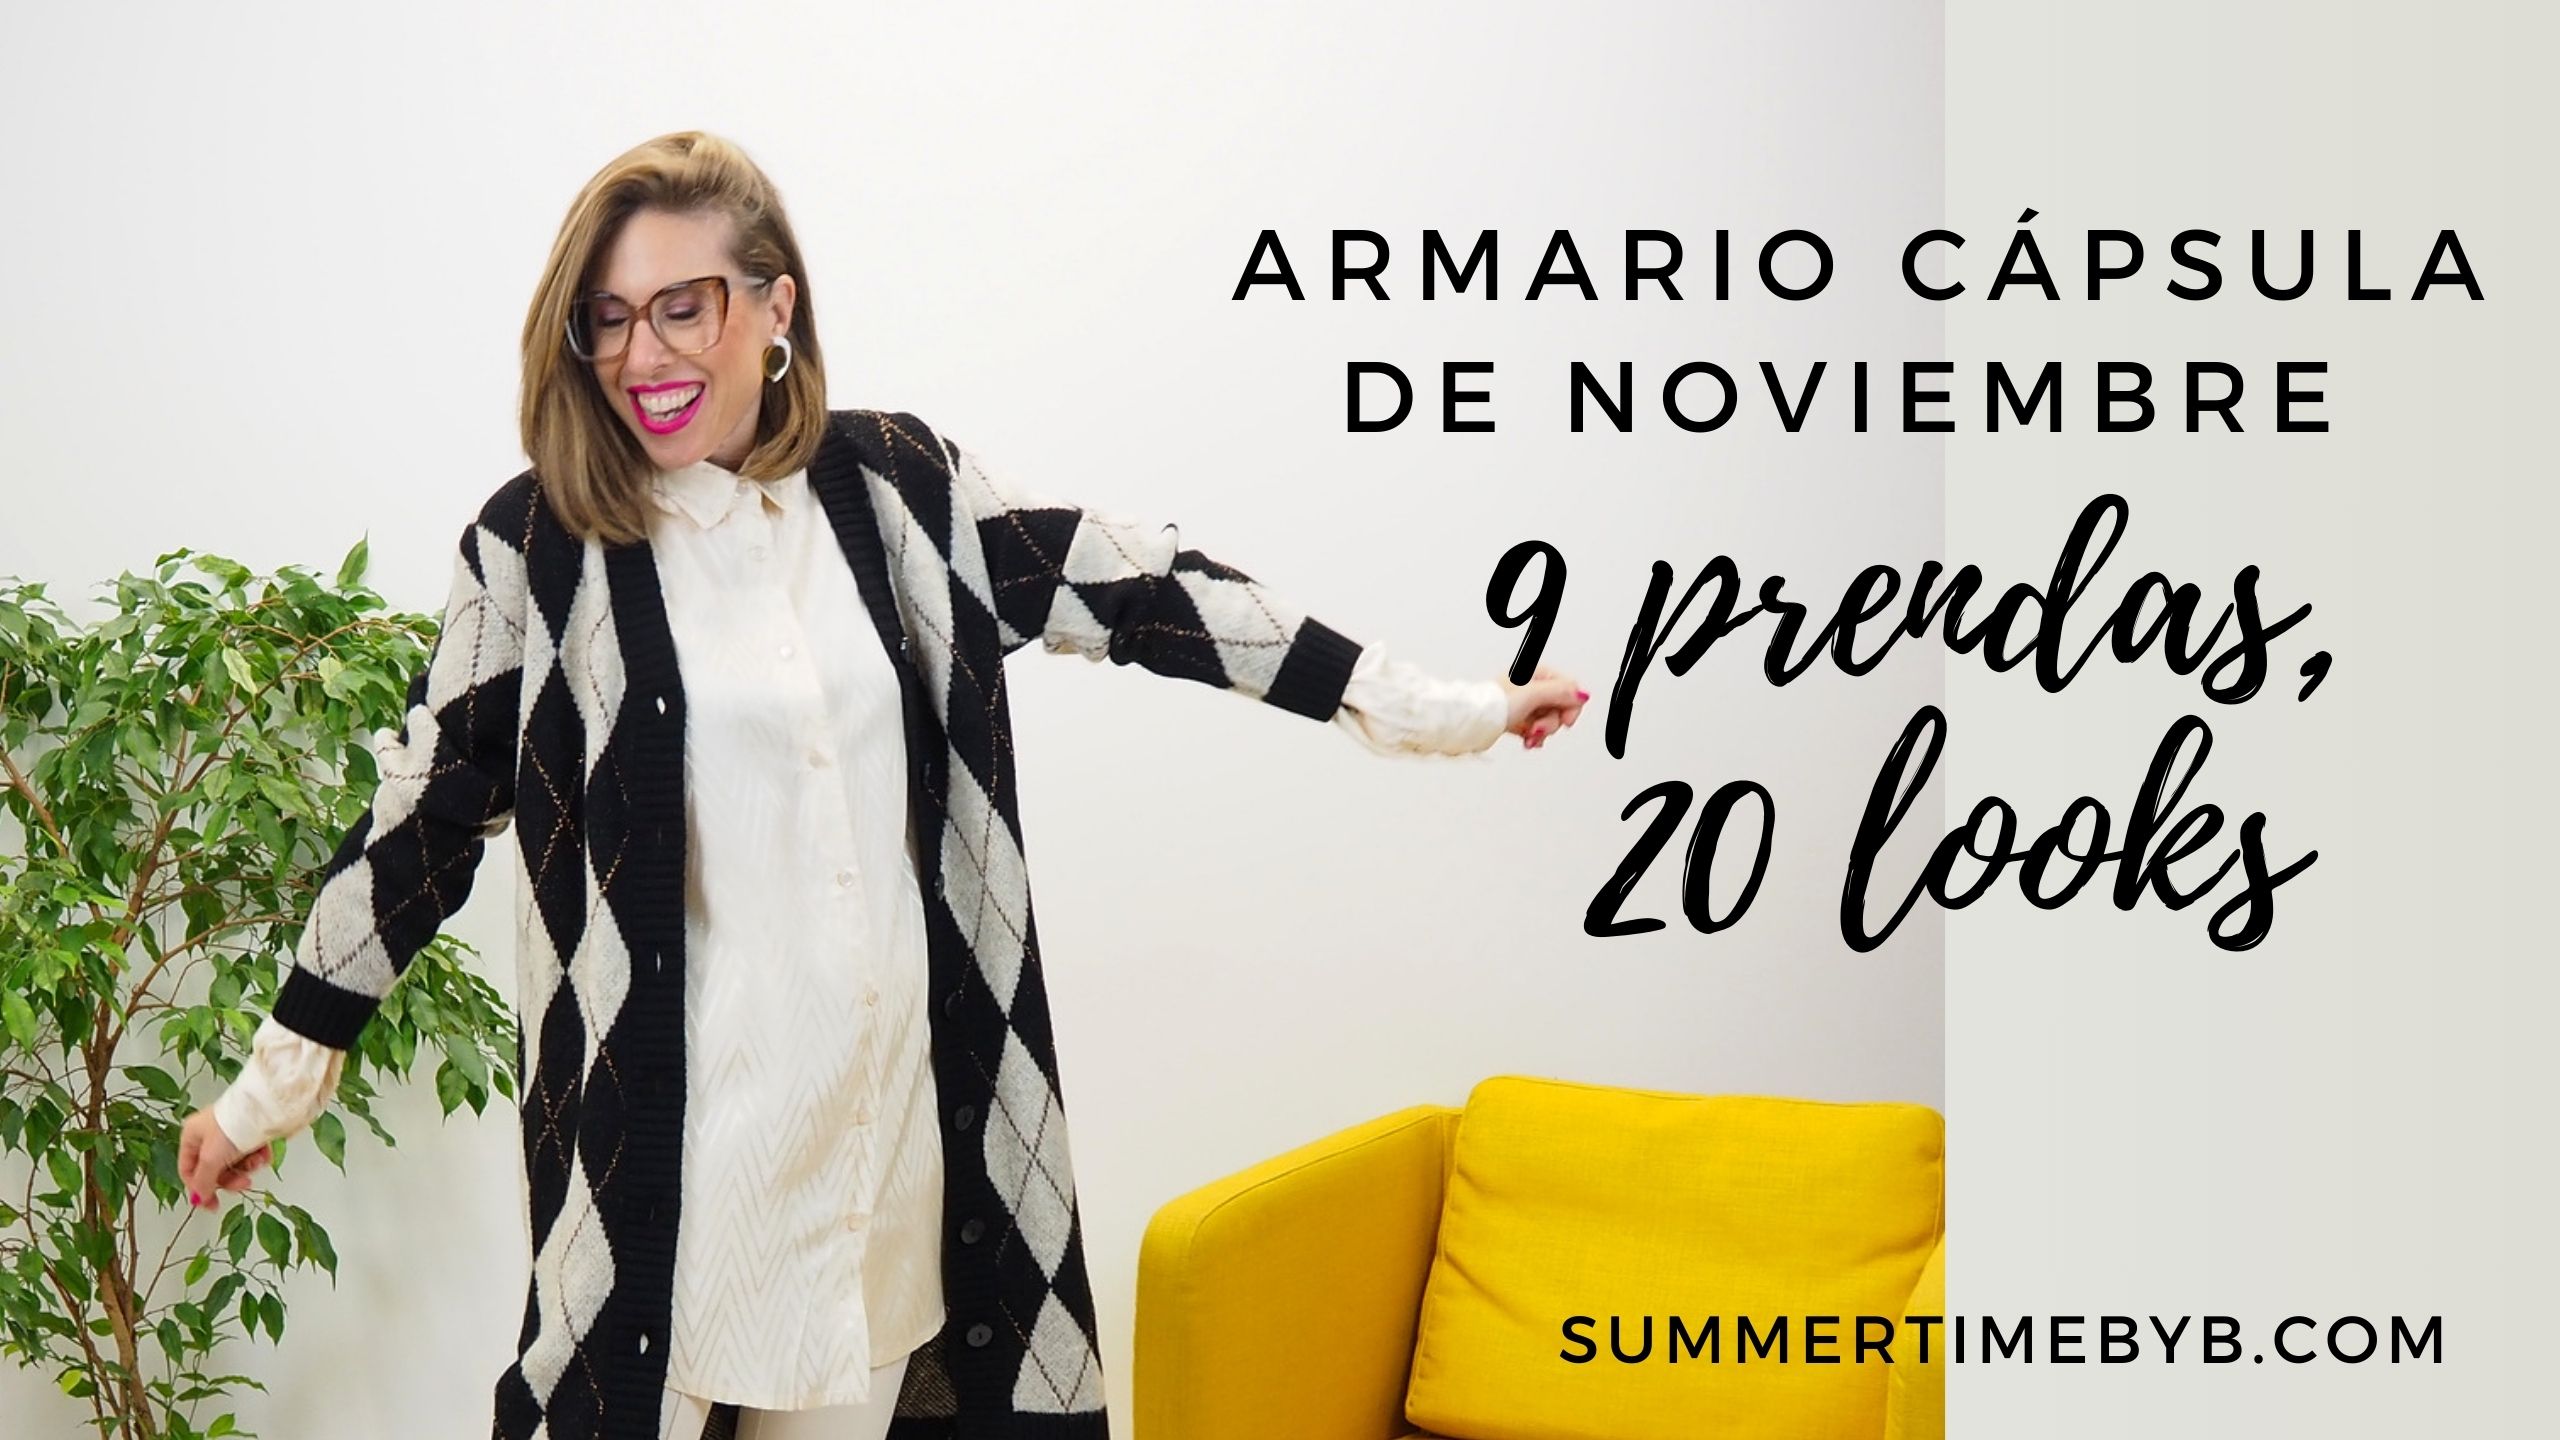 En este momento estás viendo ARMARIO CÁPSULA DE NOVIEMBRE: 9 prendas, 20 looks ideales para este otoño